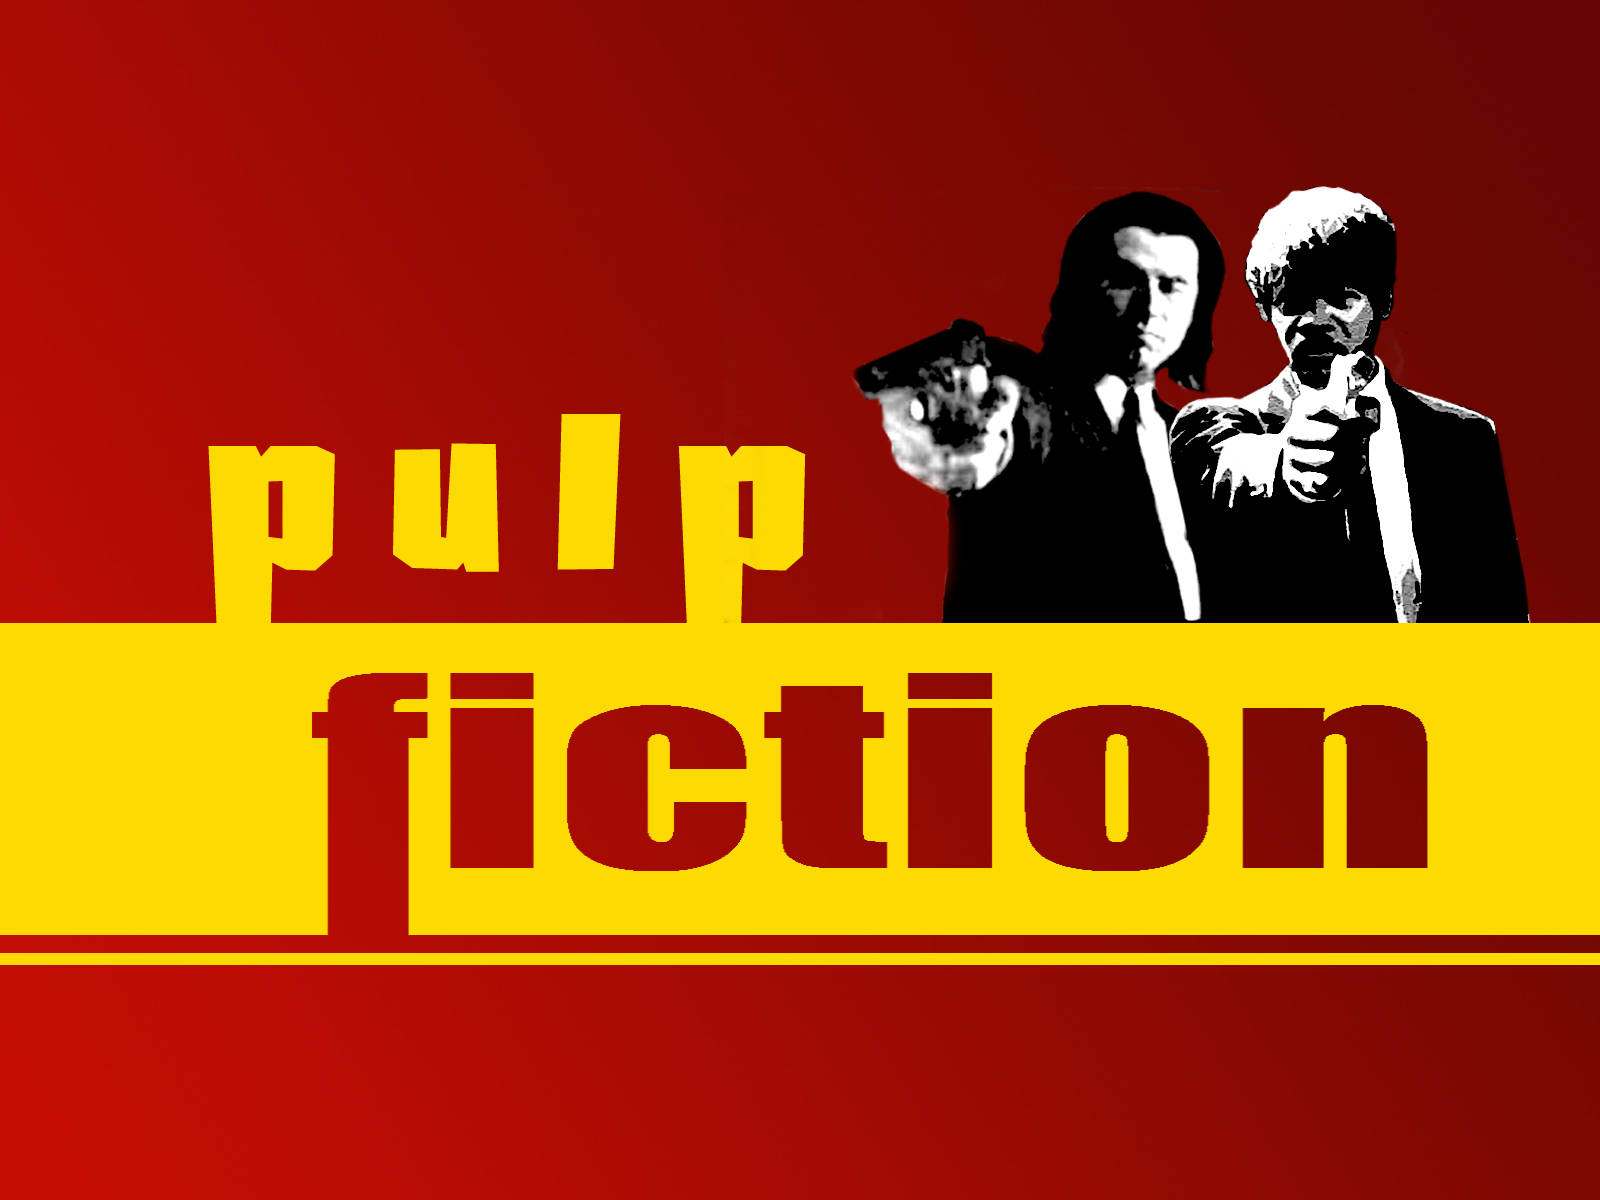 Pulp Fiction John Travolta Samuel L Jackson Wallpaper